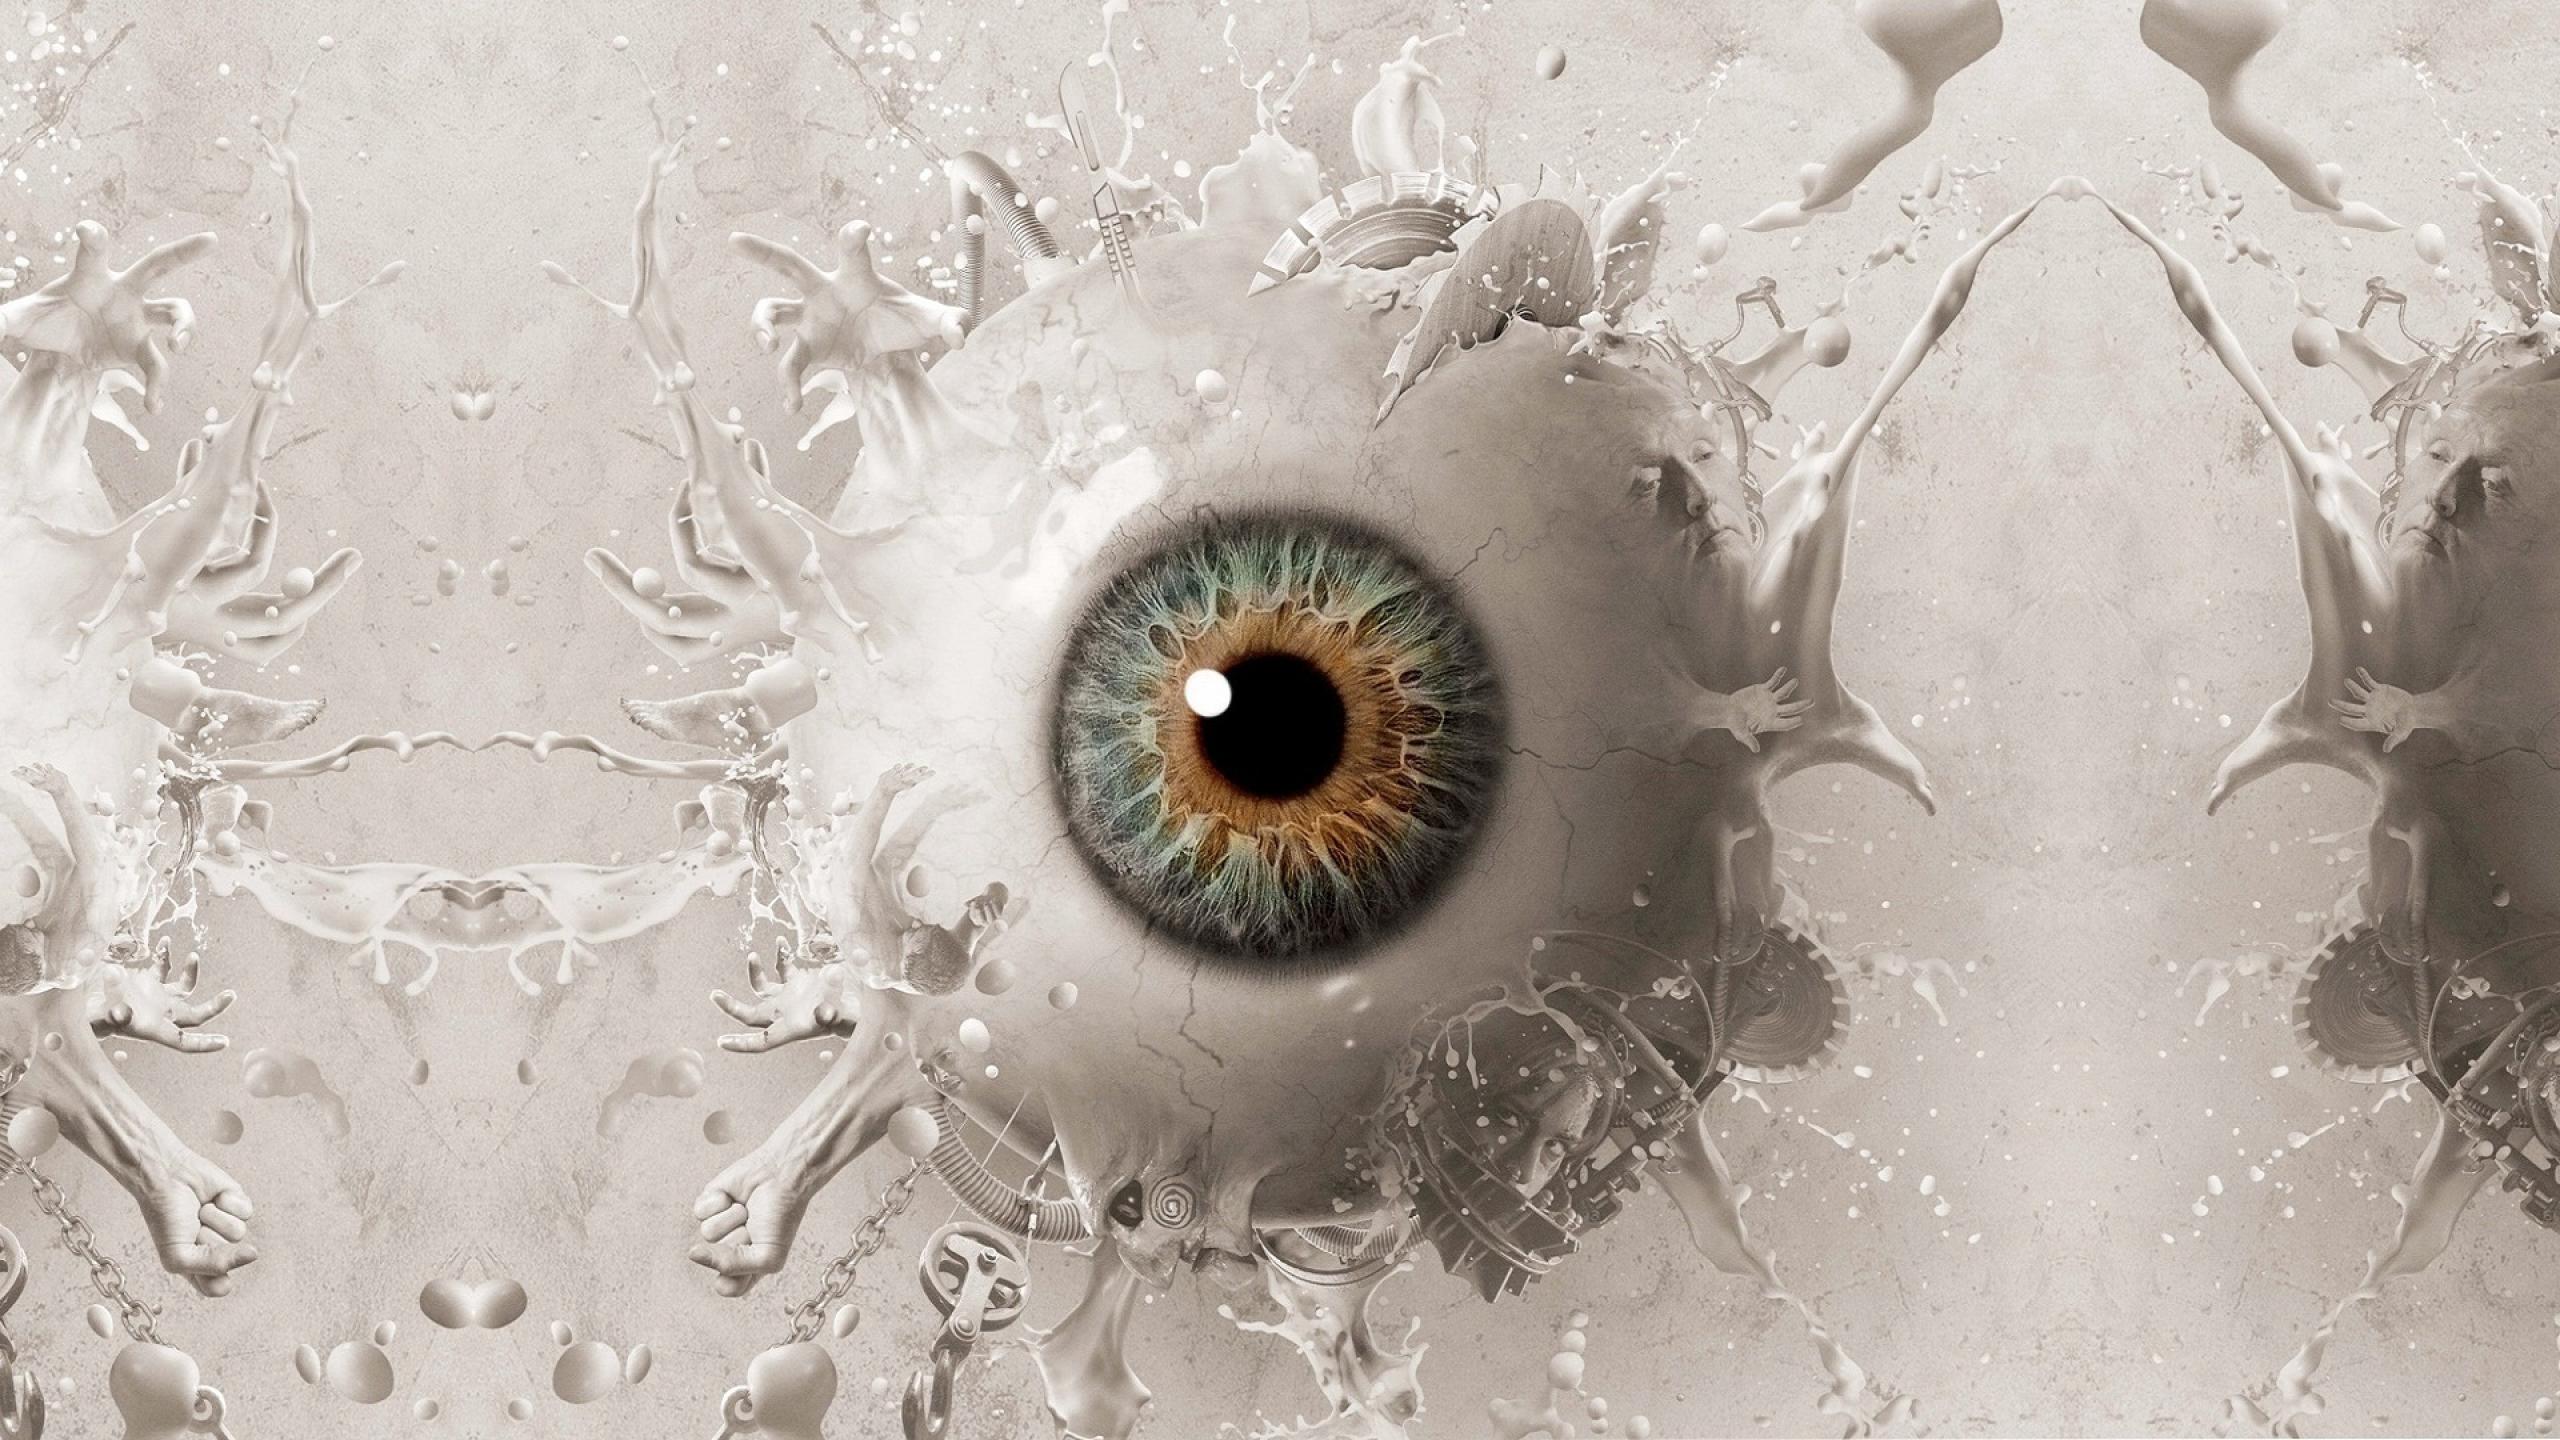 Eye Hand Artistic White Creepy Saw Movie 2560x1440